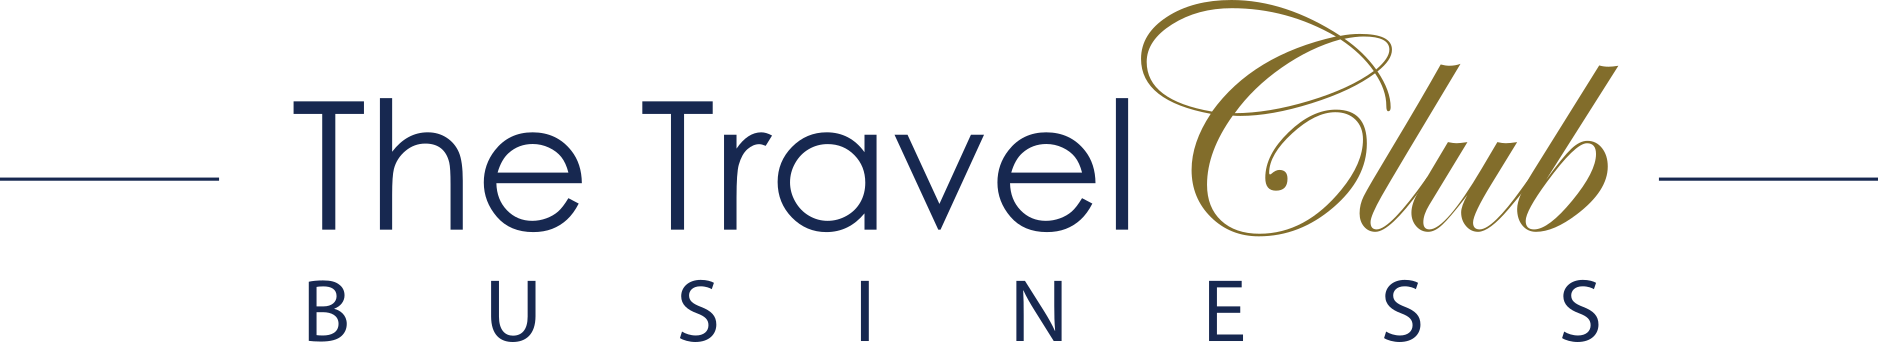 Logo - The Travel Club Business